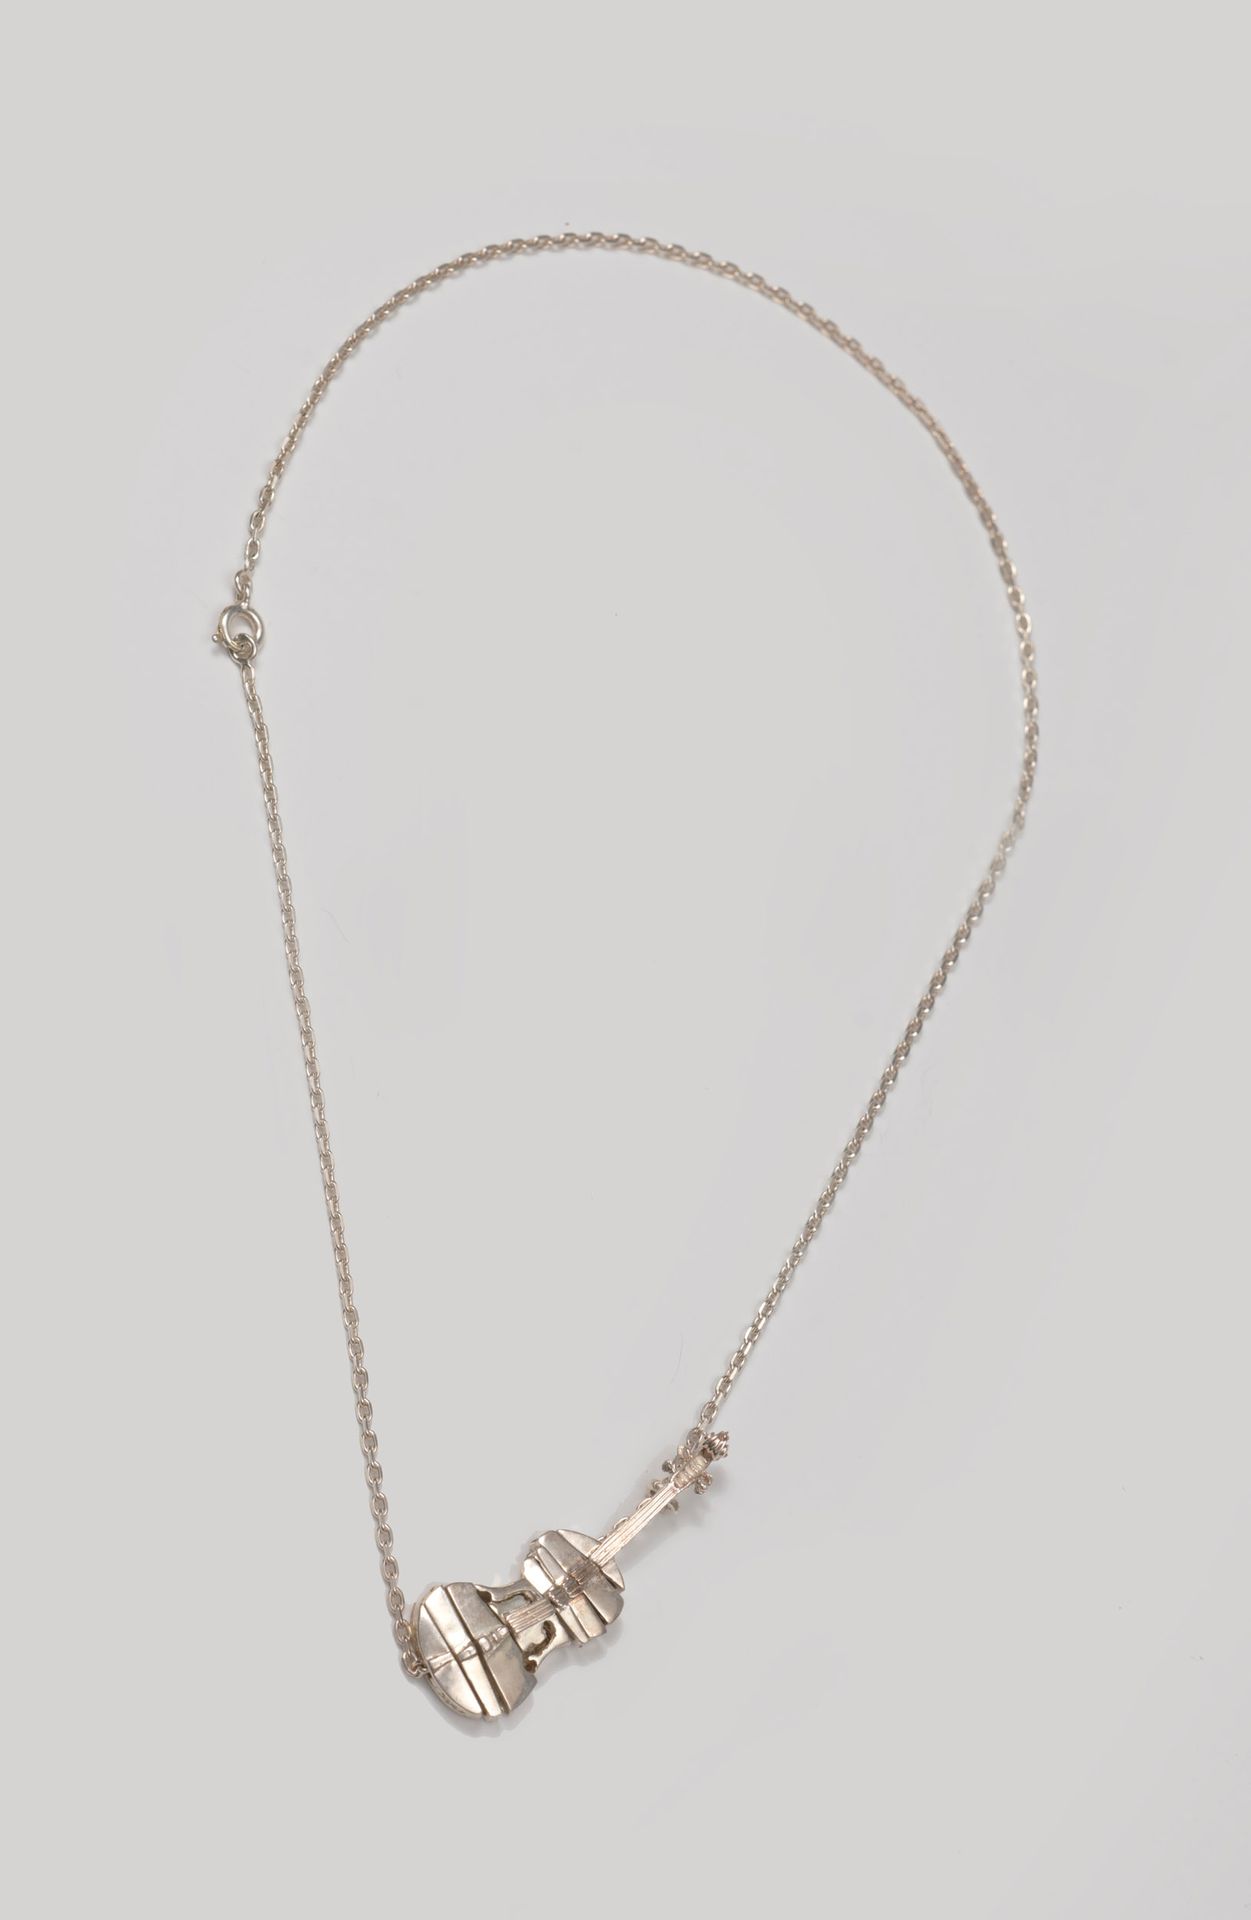 ARMAN ARMAN (1928-2005) - Halskette Violon enchaîné horizontal - Sie stellt eine&hellip;